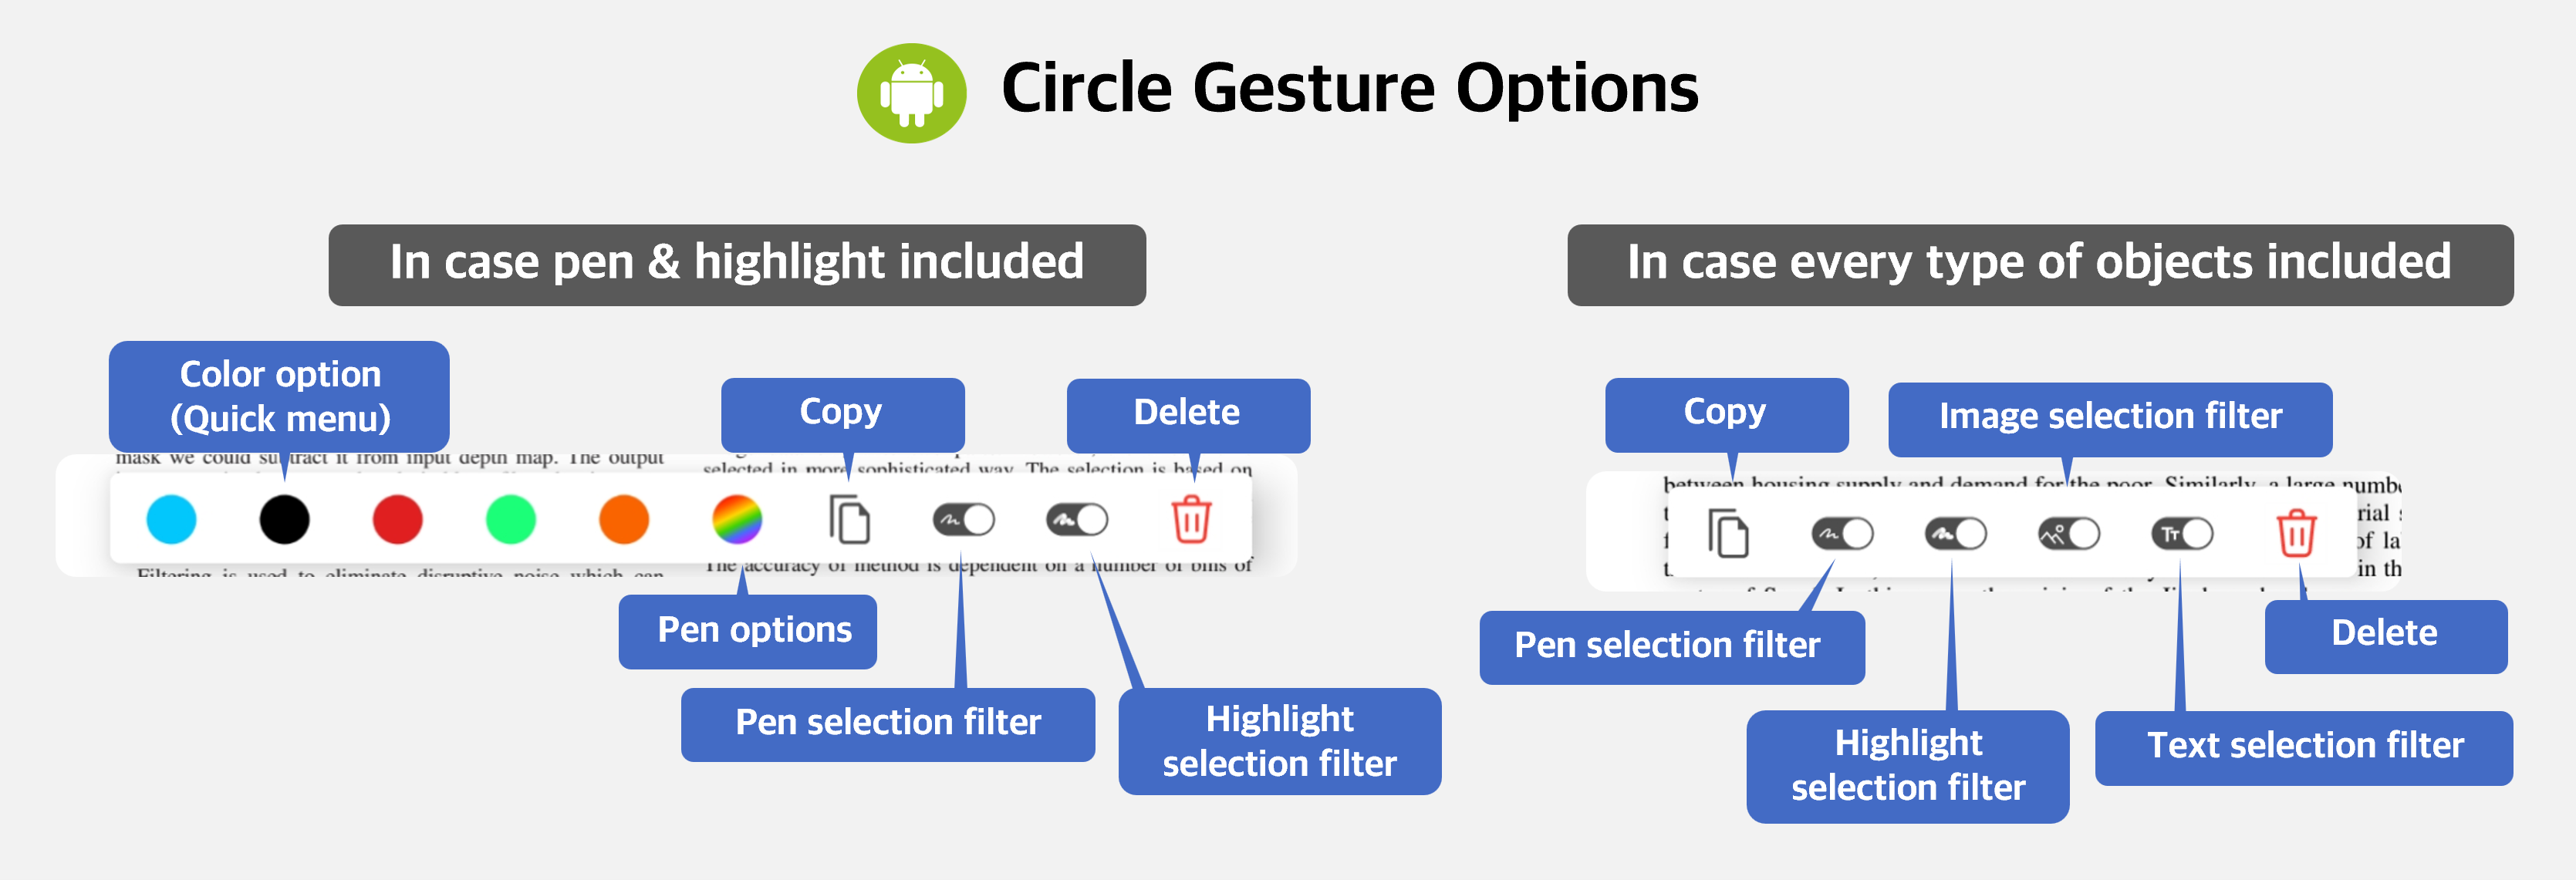 Circle_gesture_options.png